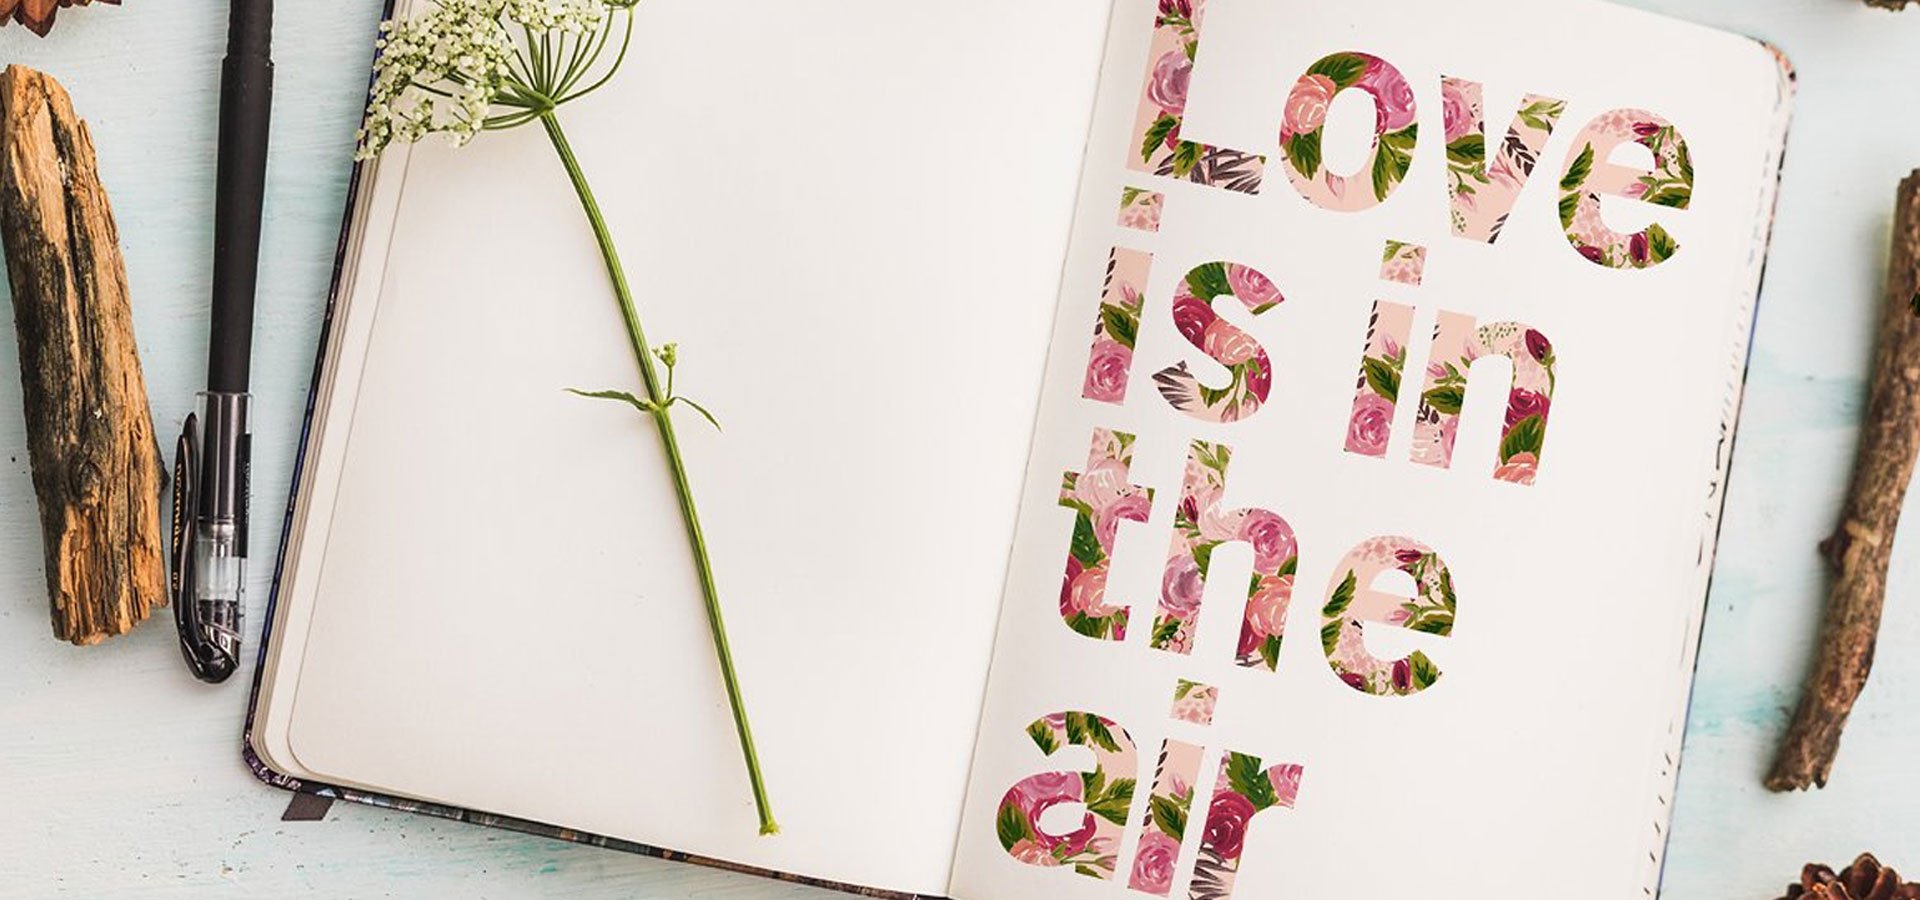 19+ Inspiring Floral Typography Designs